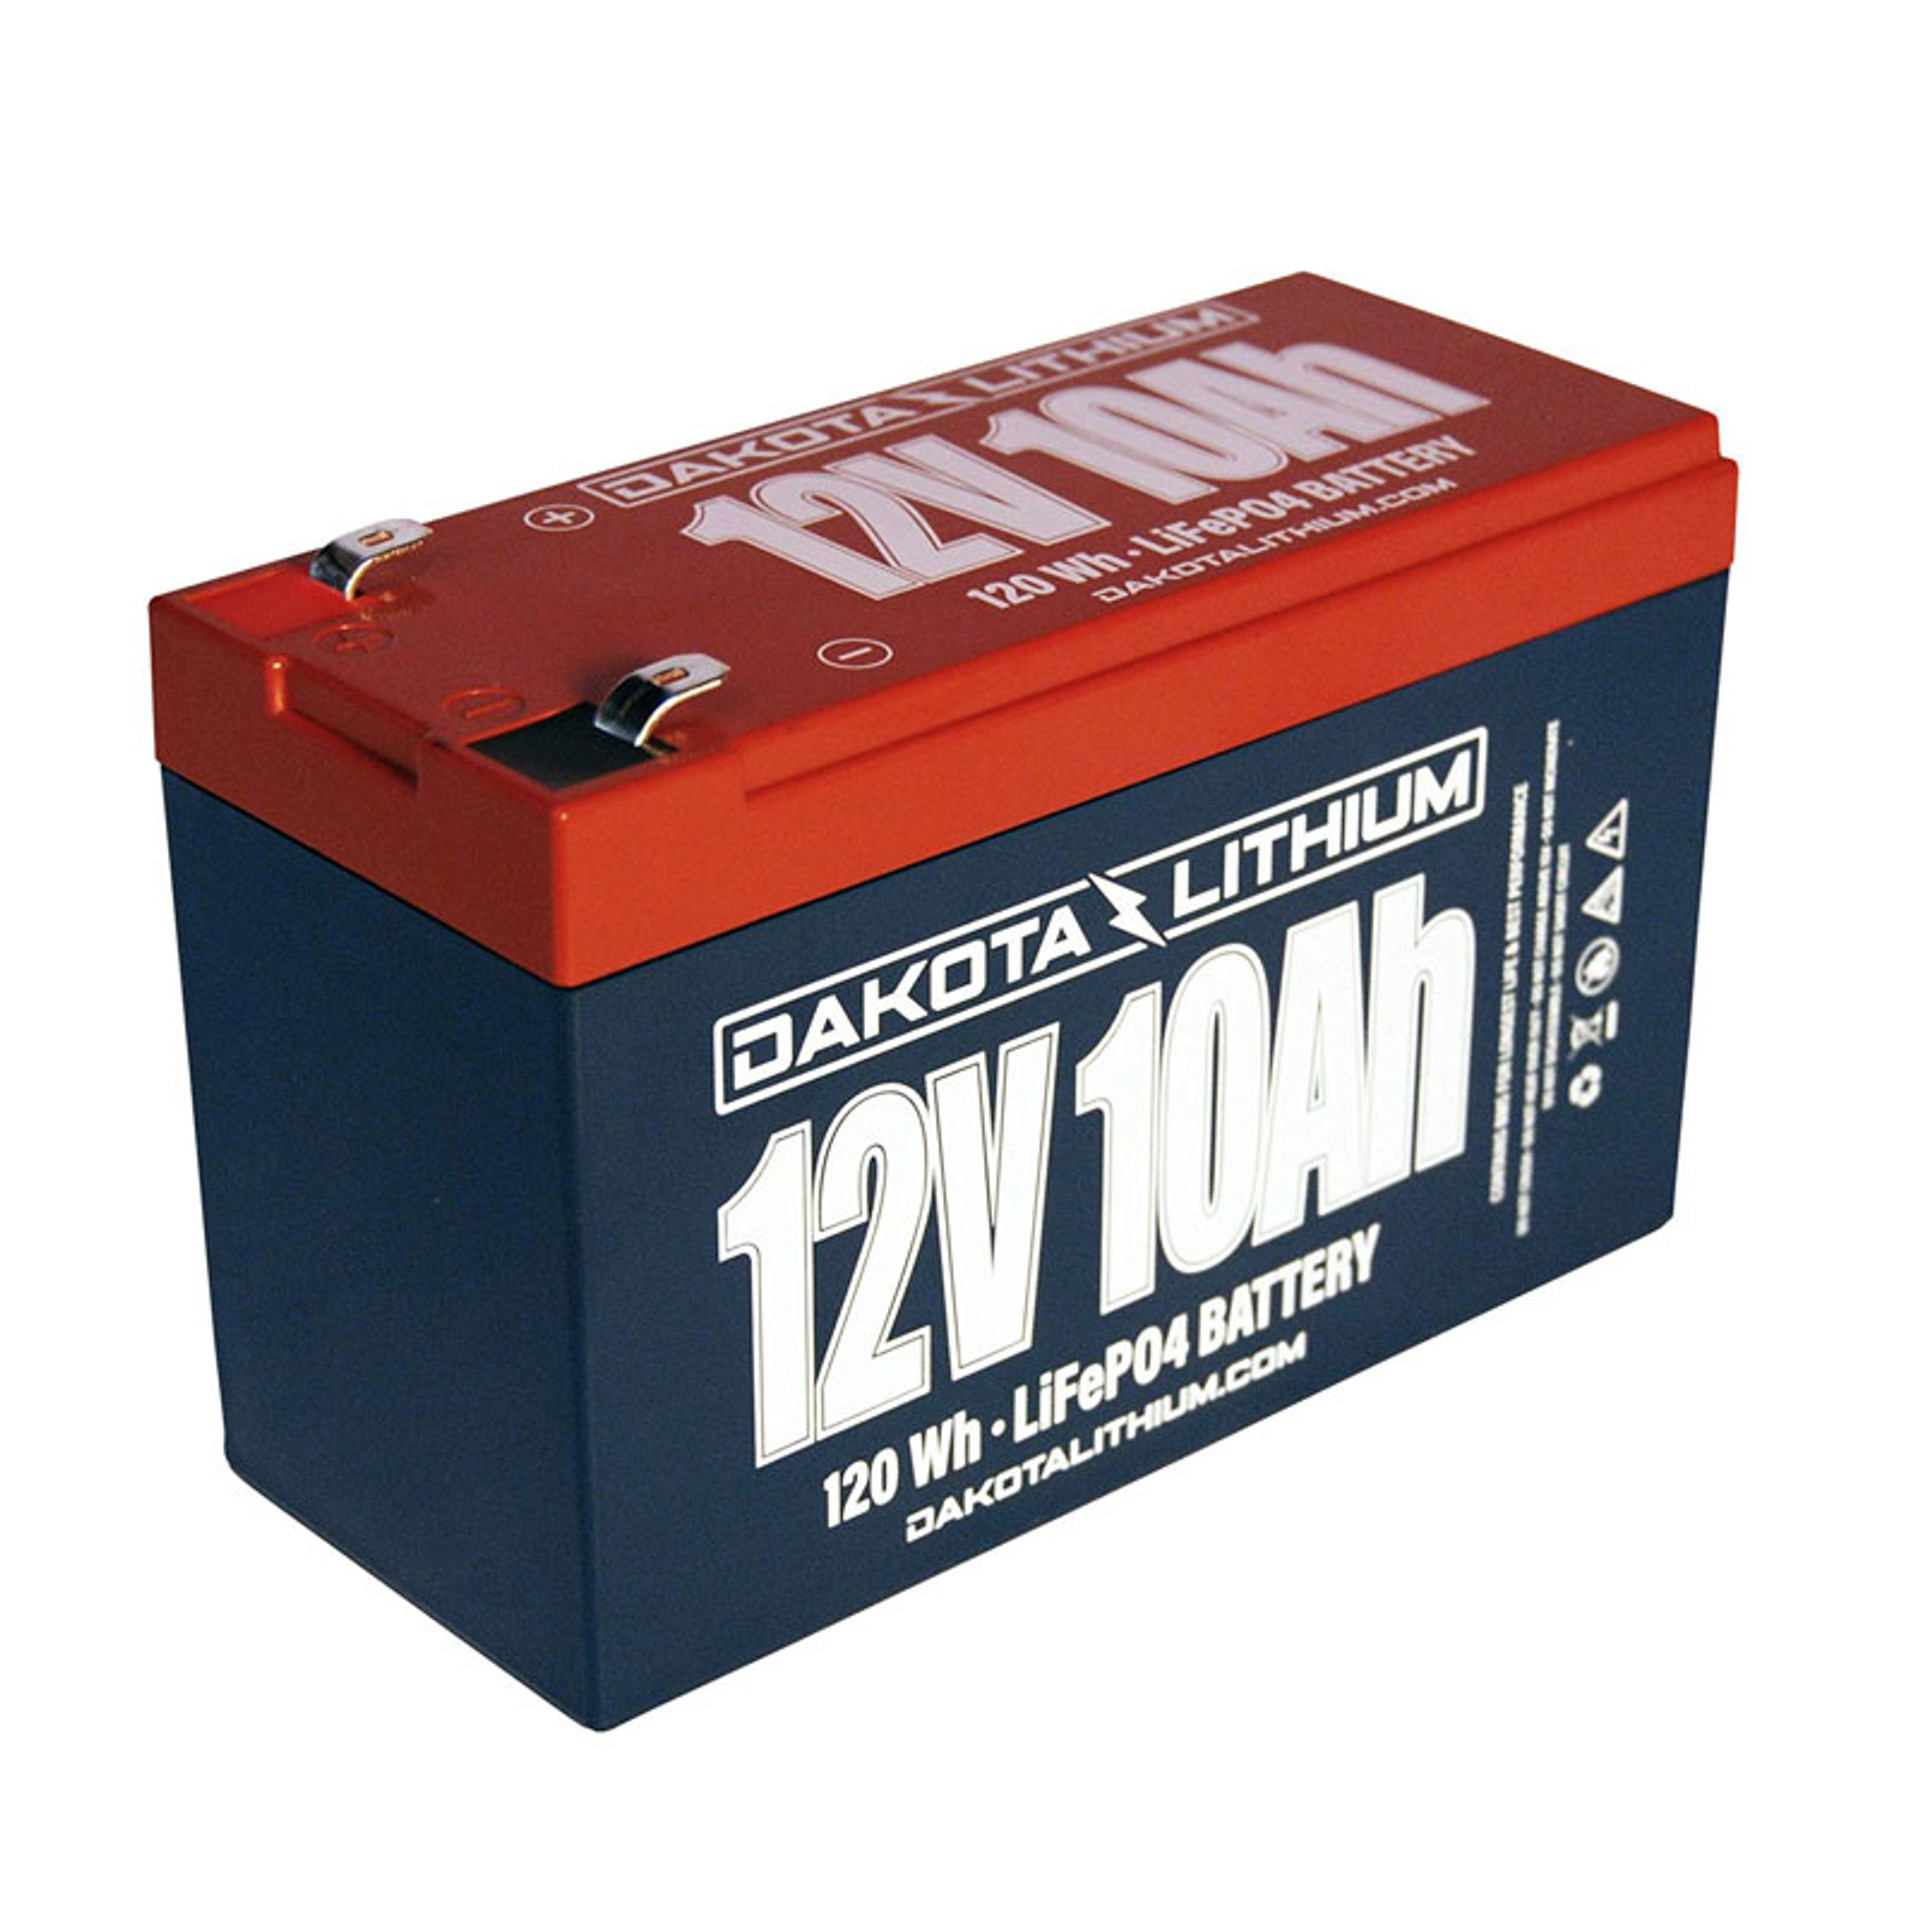 Dakota Lithium 12v 10ah Battery Pack And Paddle